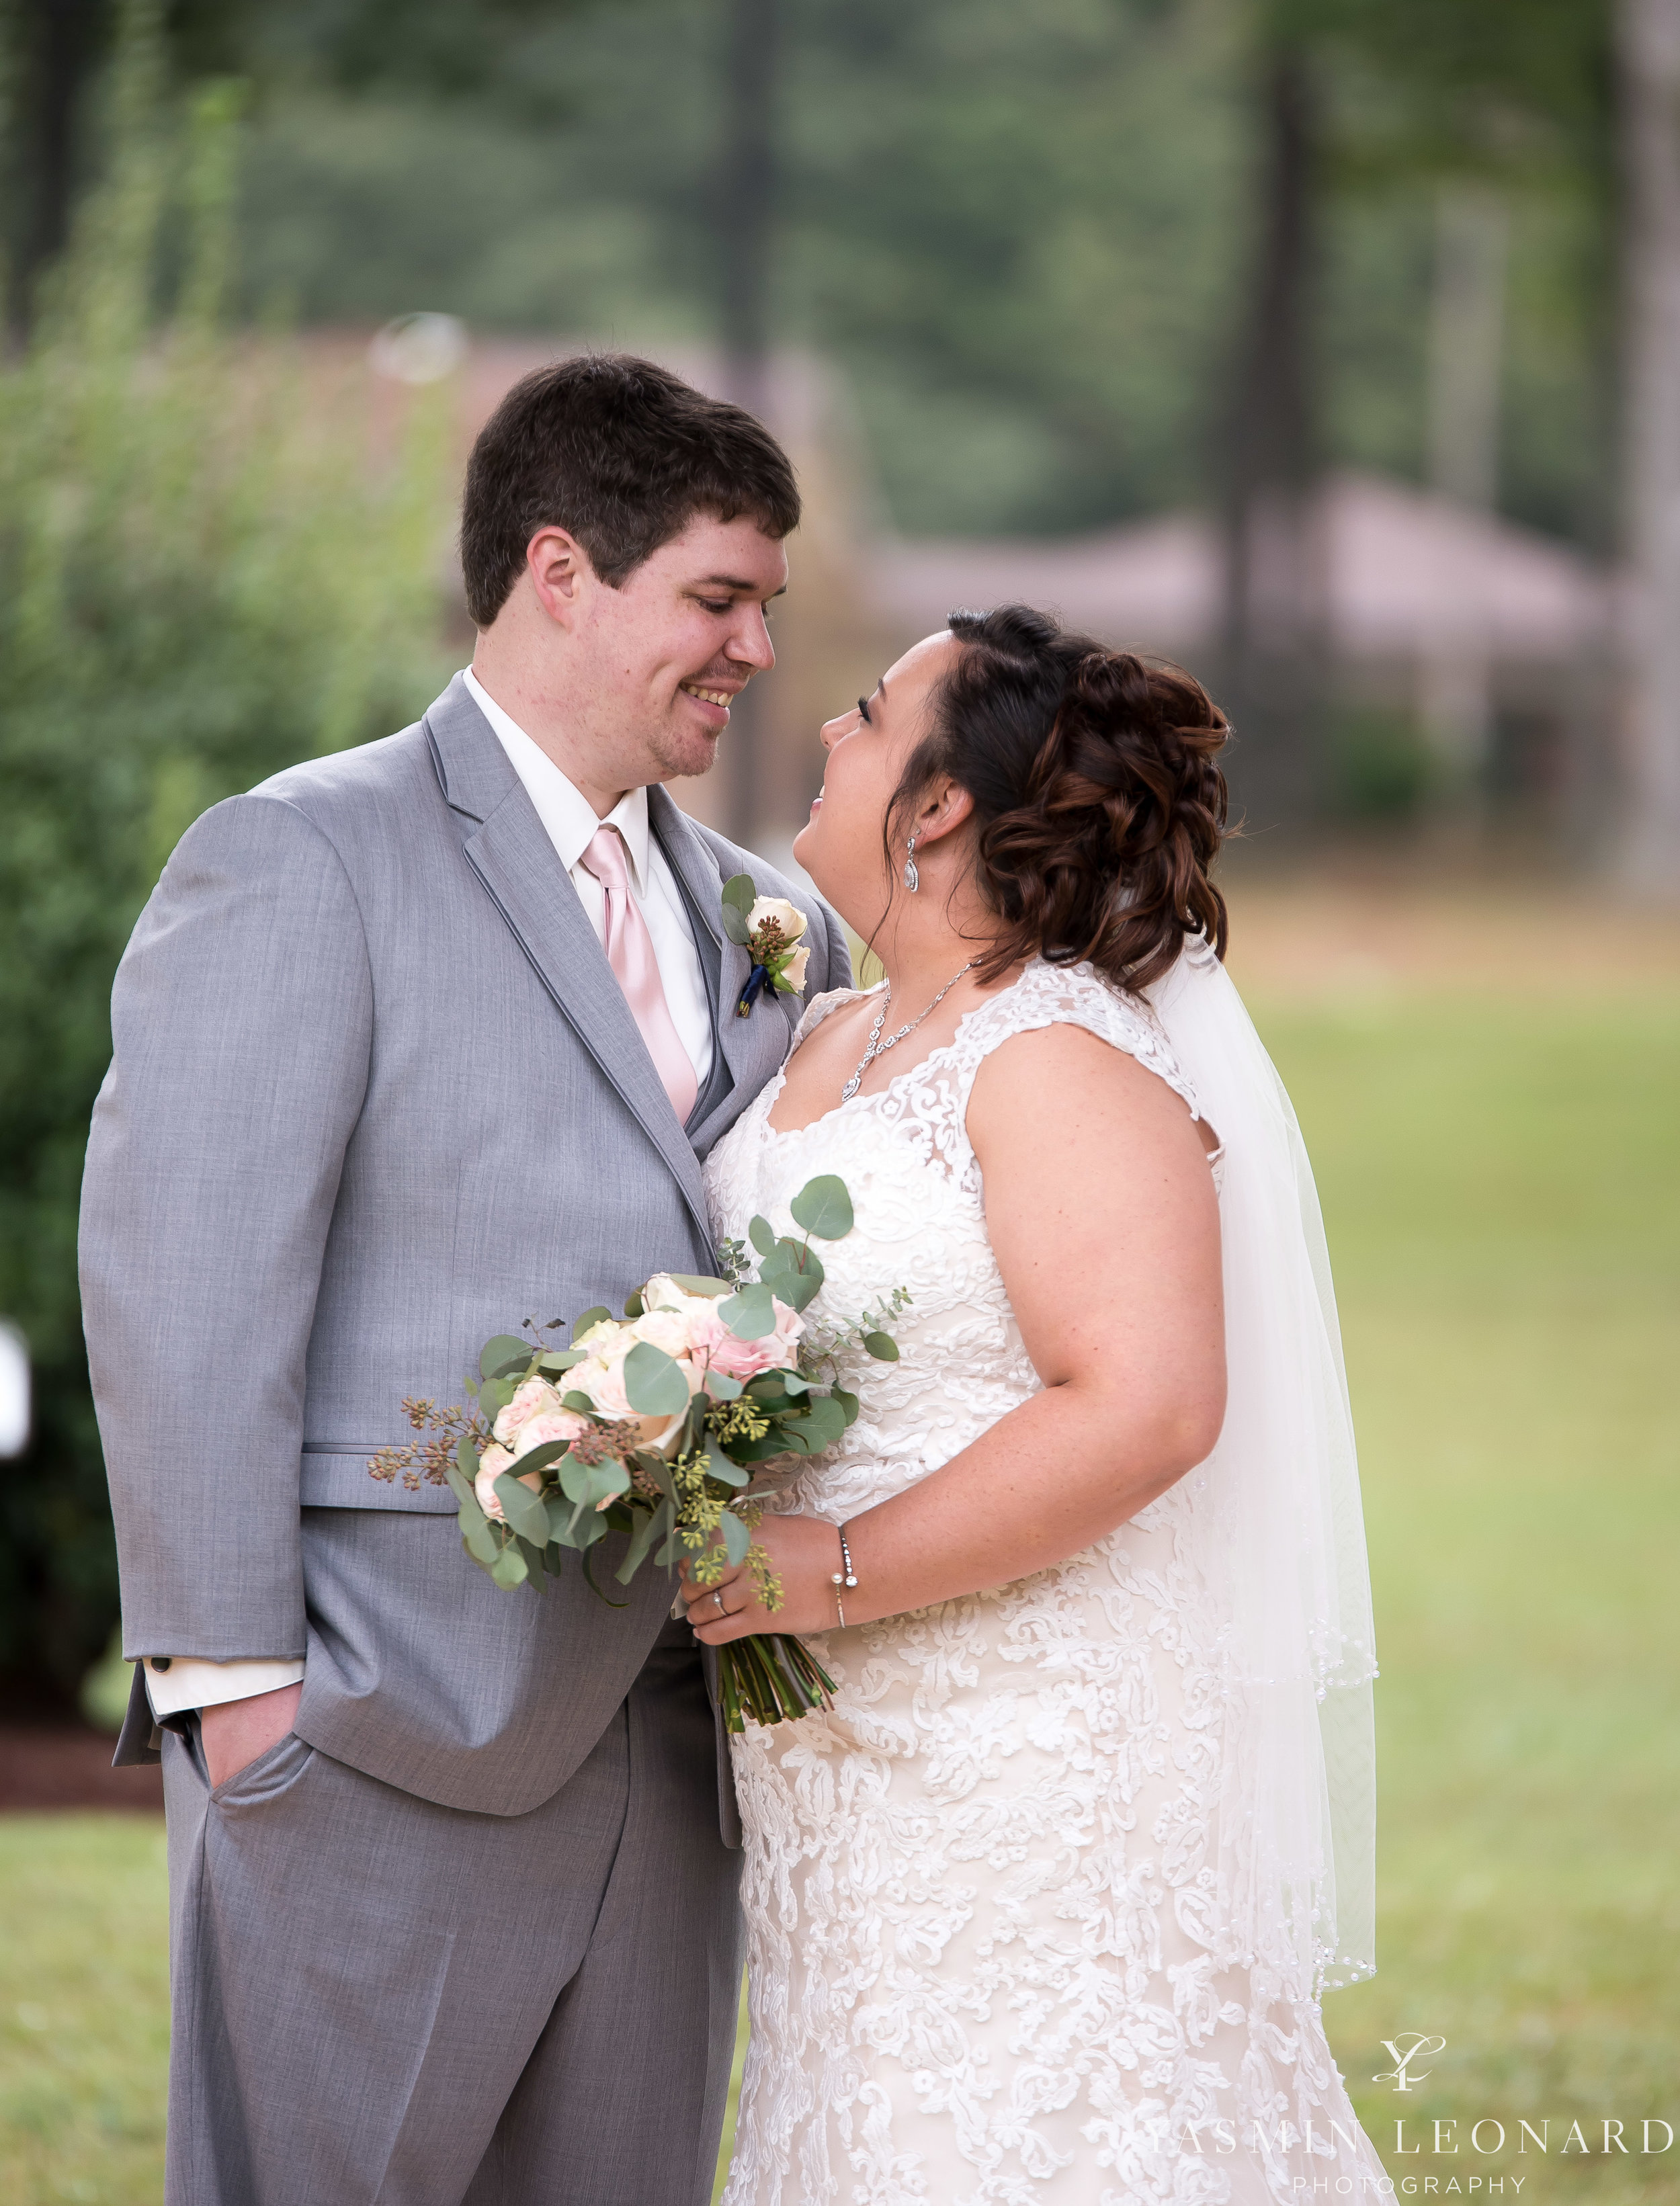 Wesleyan Christian Academy Wedding - High Point Wedding - NC Wedding Photographer - Yasmin Leonard Photography-24.jpg